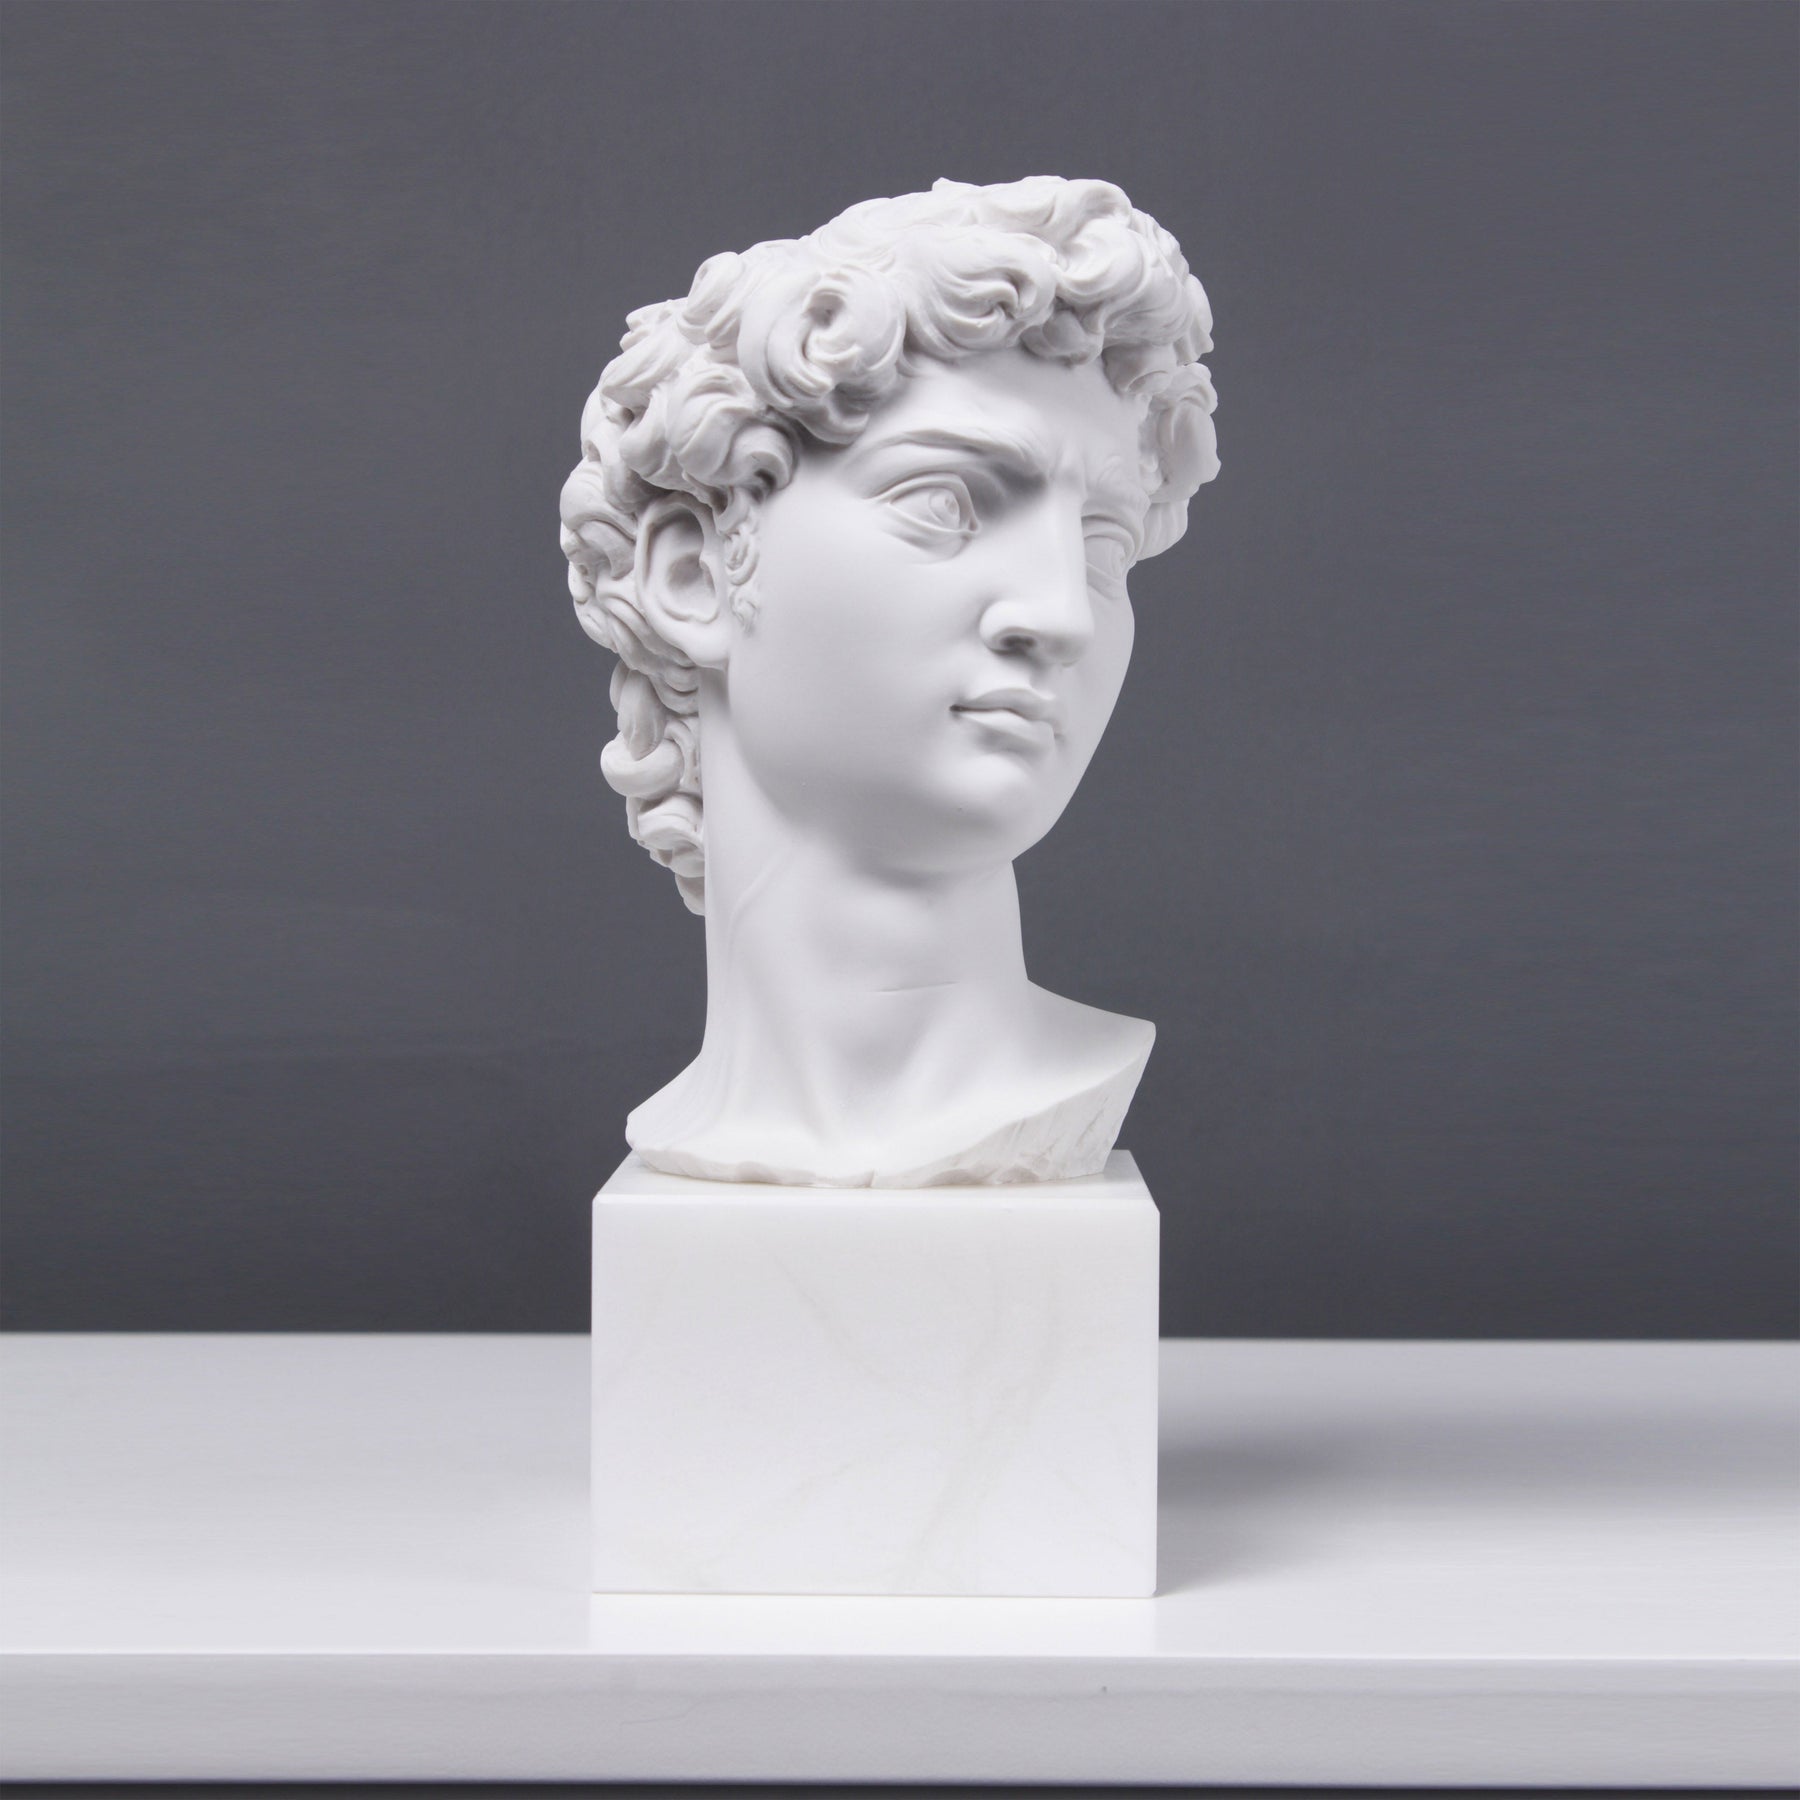 David Bust (By Michelangelo) marble sculpture statue greek roman